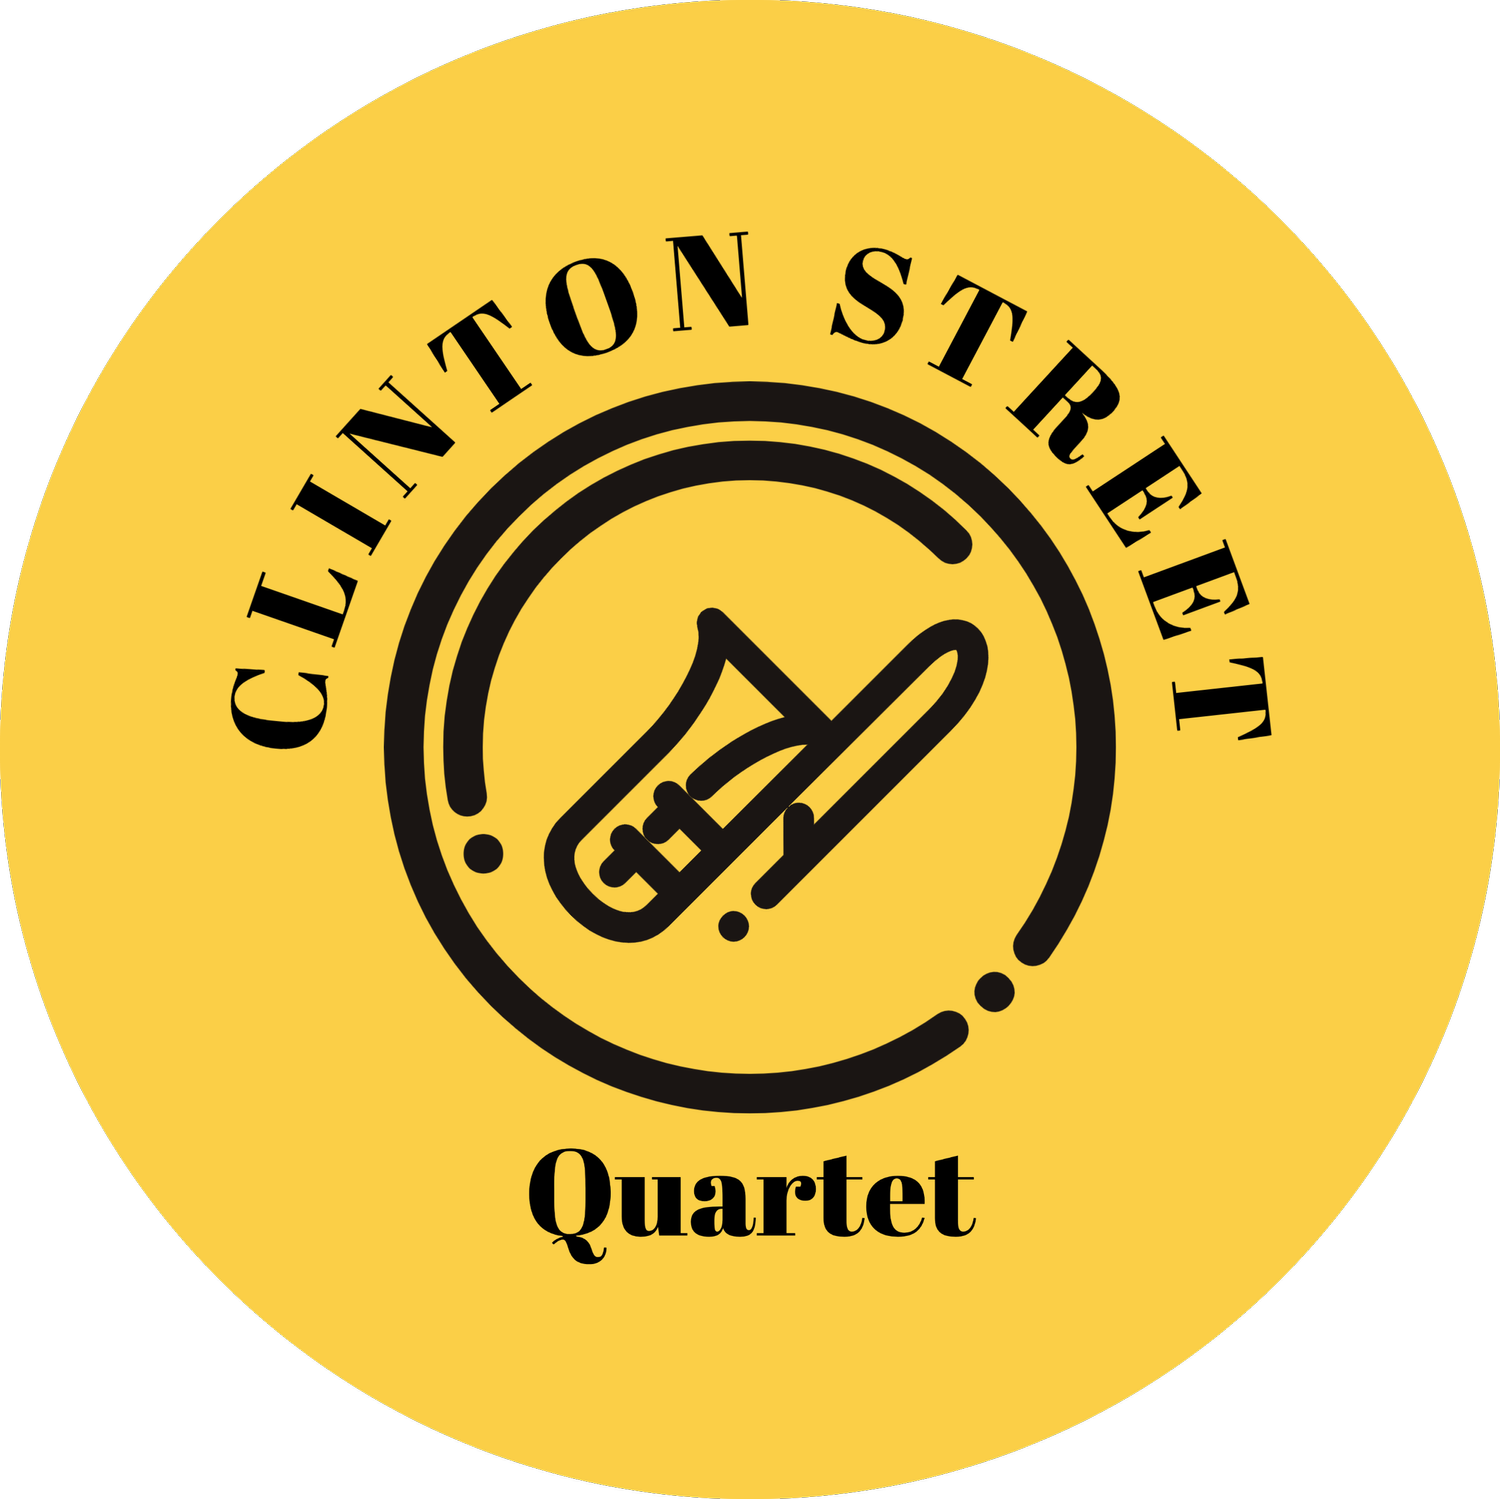 Clinton Street Quartet